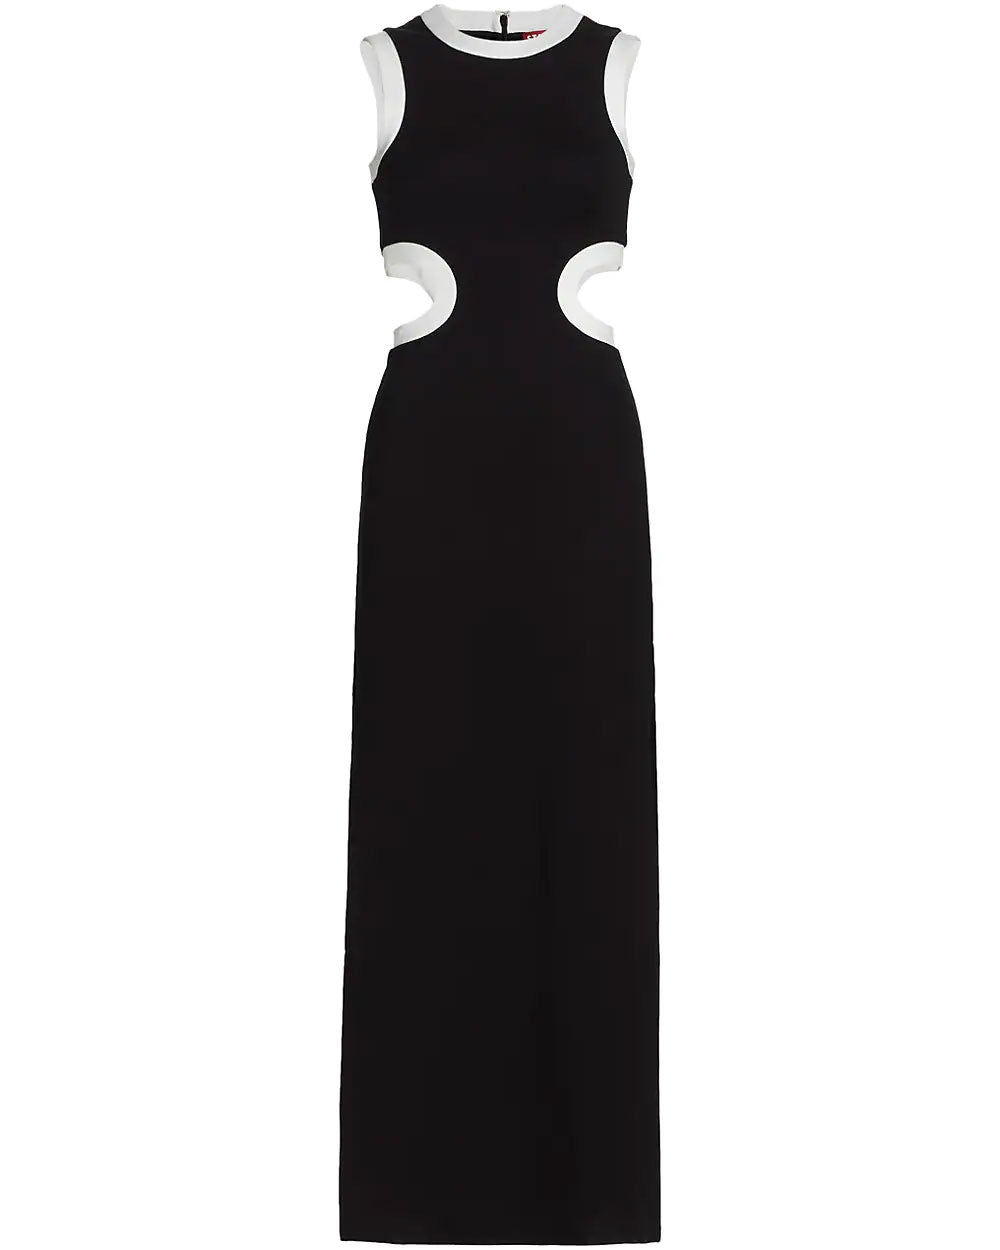 Black Sleeveless Dolce Midi Dress